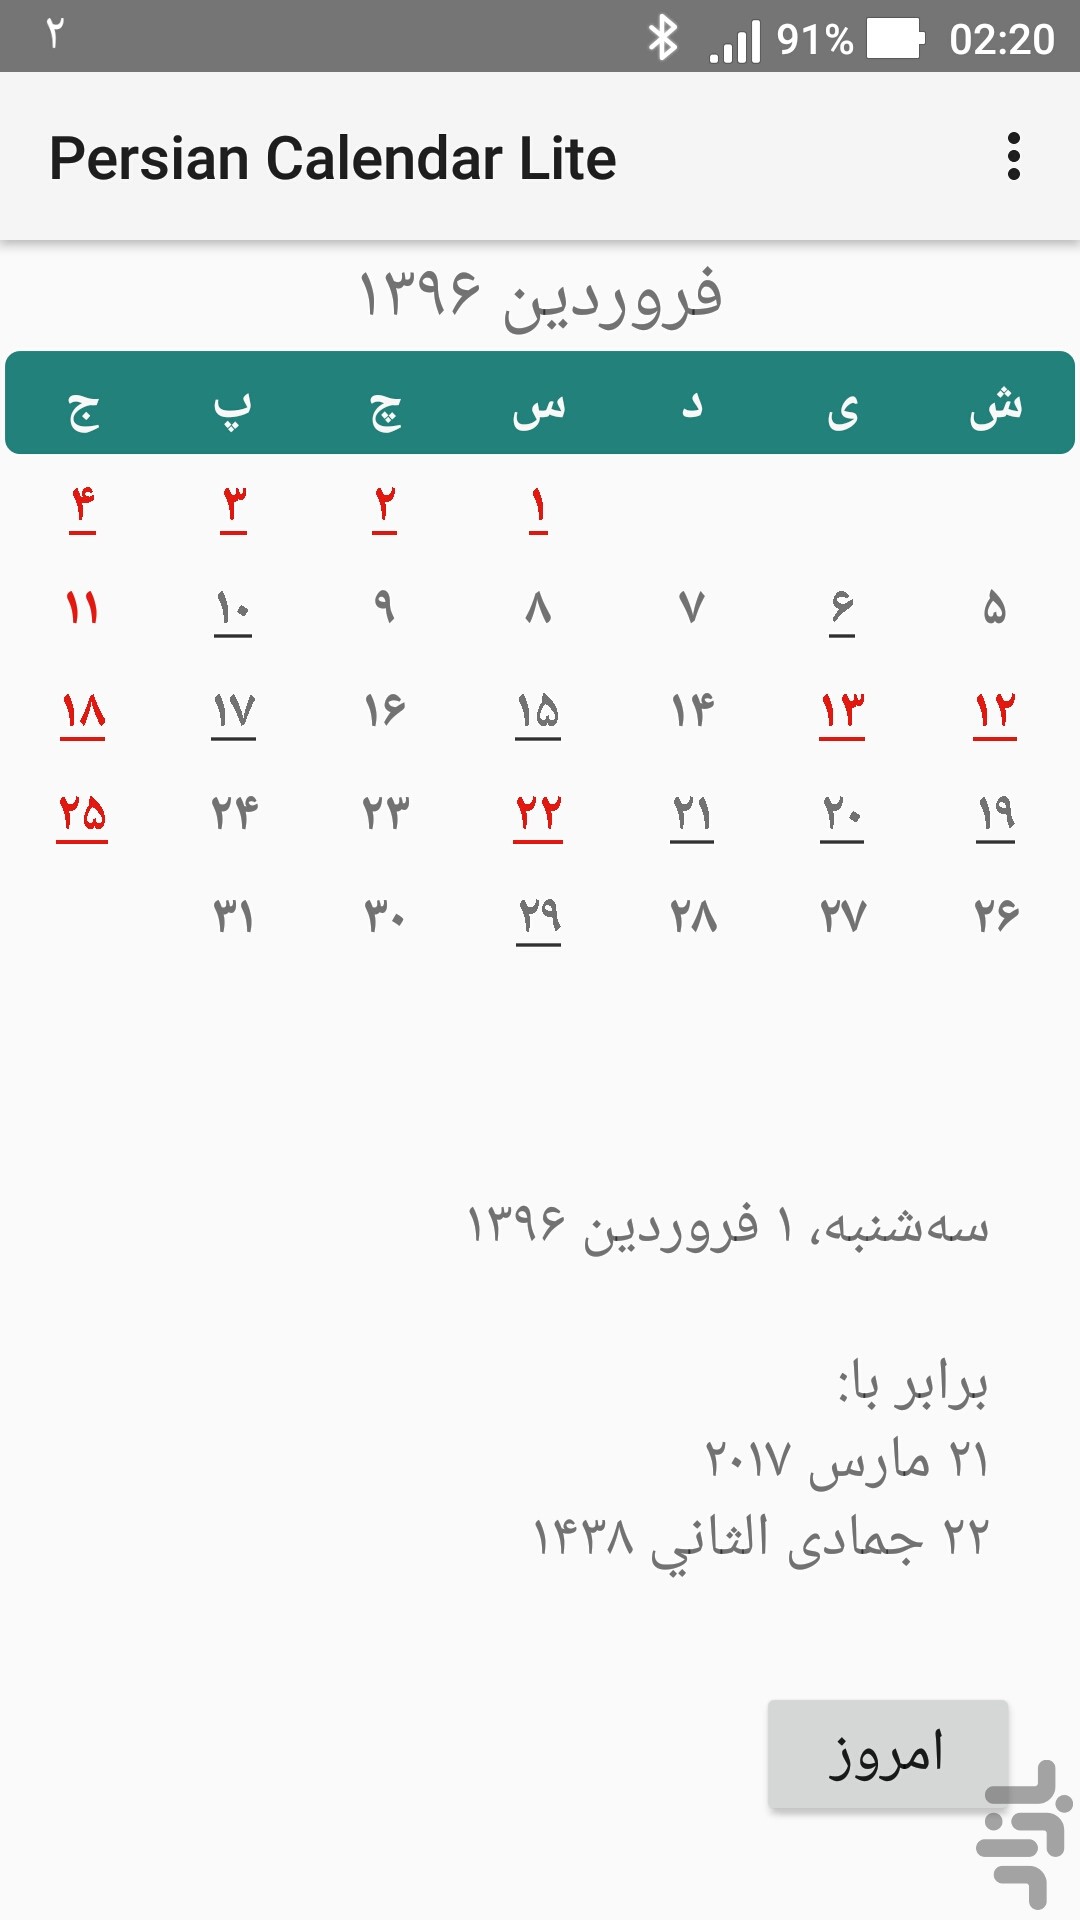 Persian Calendar Lite Download Install Android Apps Cafe Bazaar